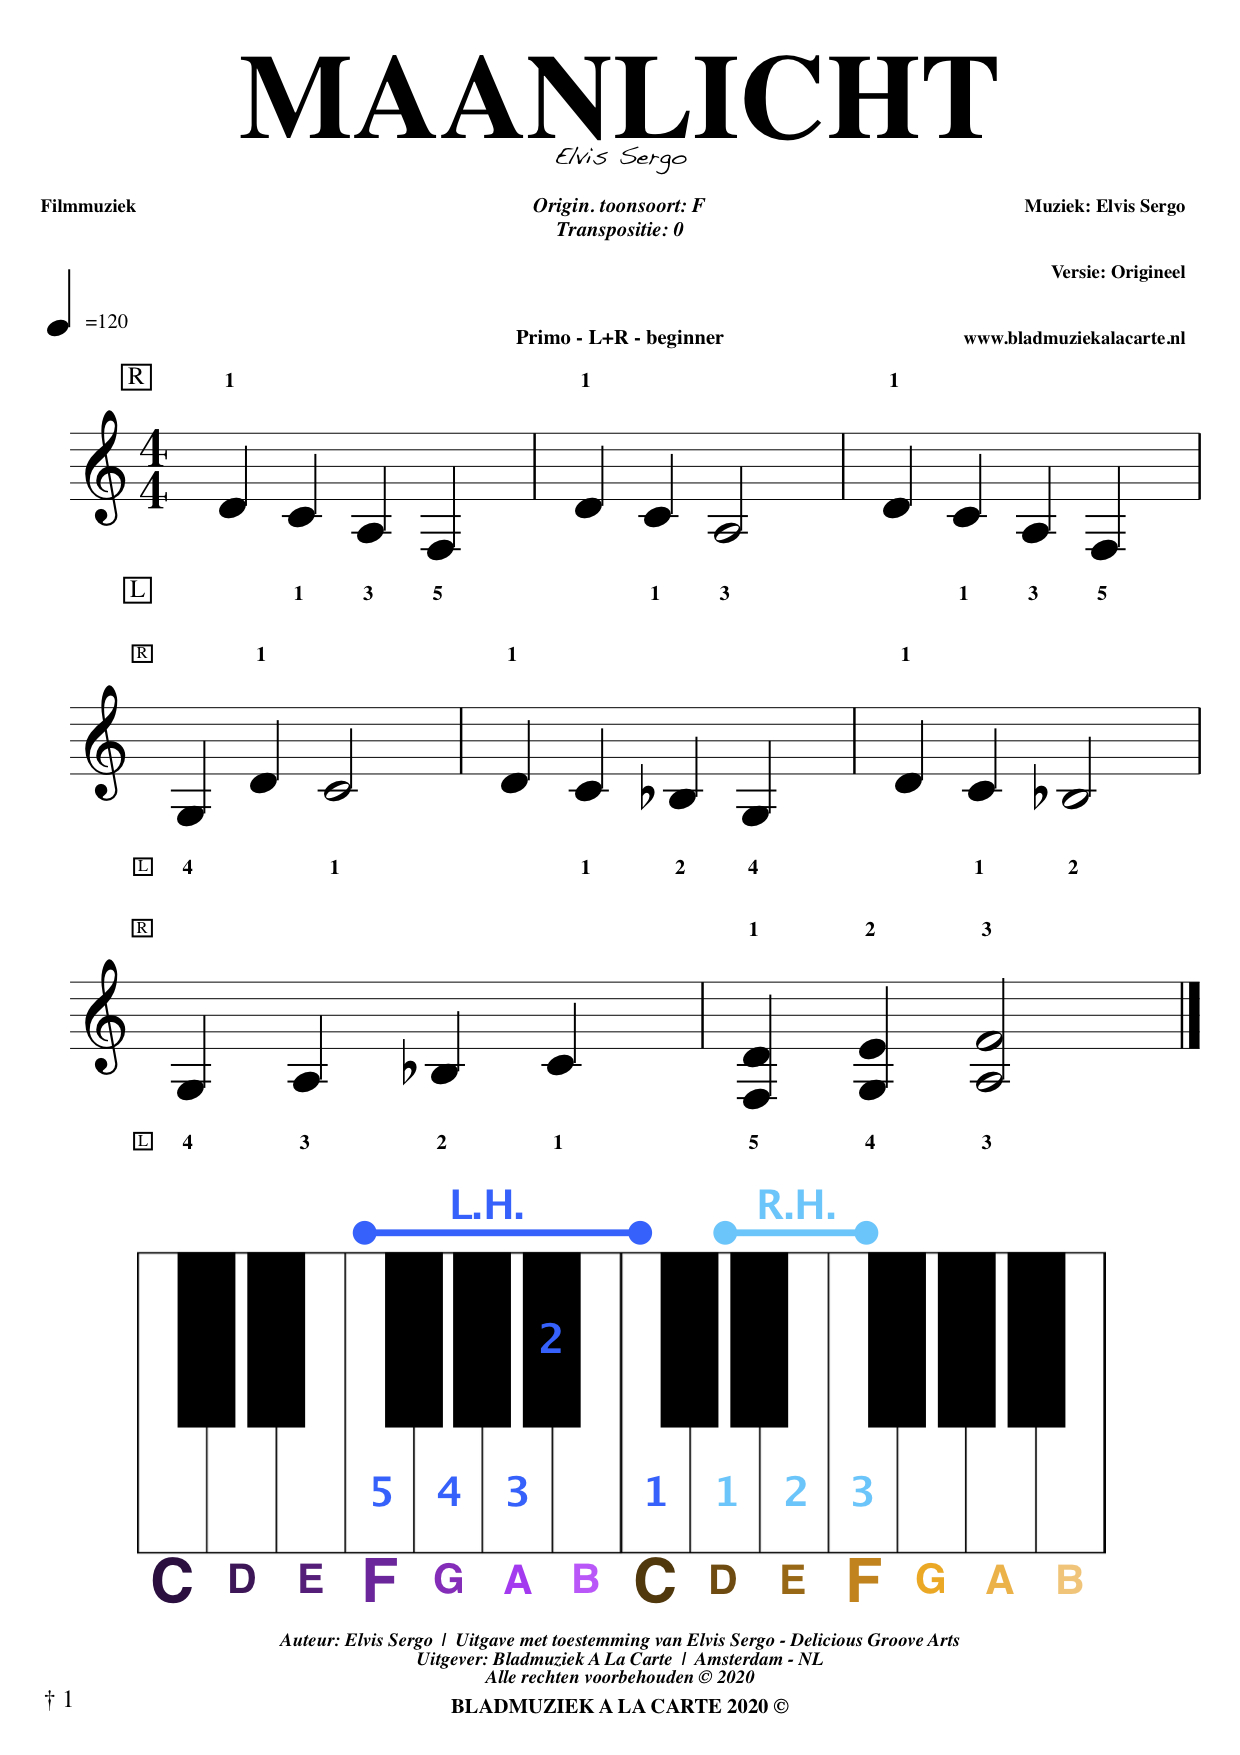 pond In zicht ketting Gratis bladmuziek piano keyboard hammond theorie - Bladmuziek